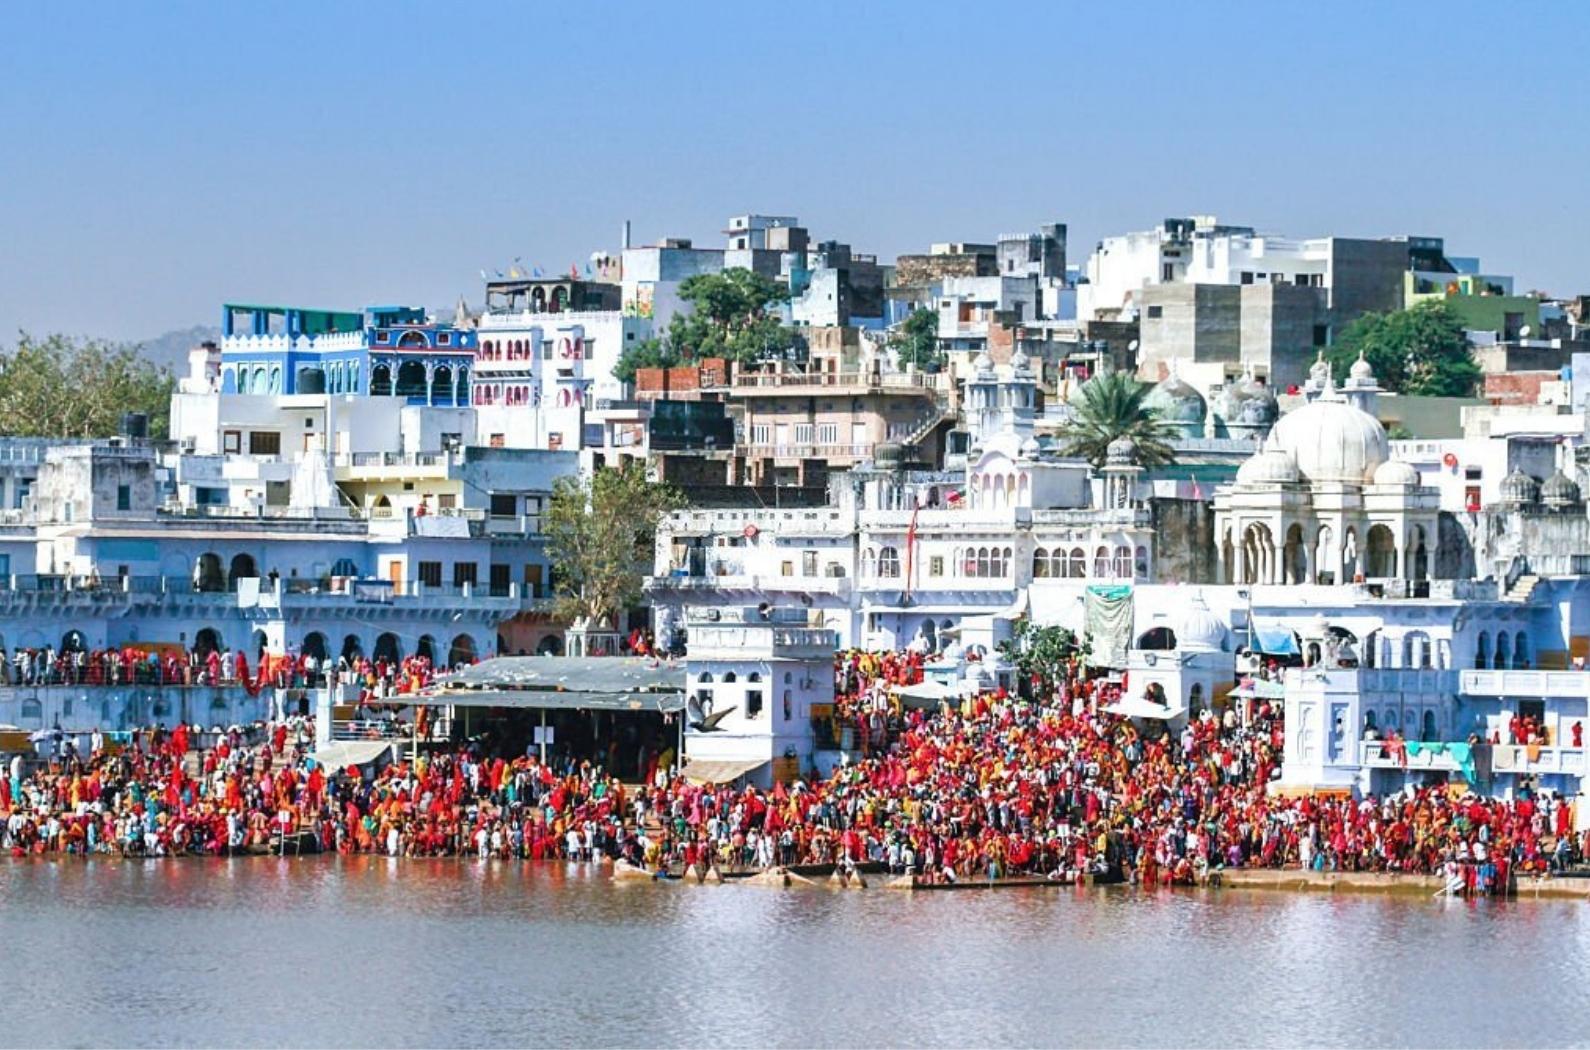 Scene of Pushkar lake during Pushkar Camel fair. Pilgrims from all over the India come to take holy bath at this religious Pushkar lake.